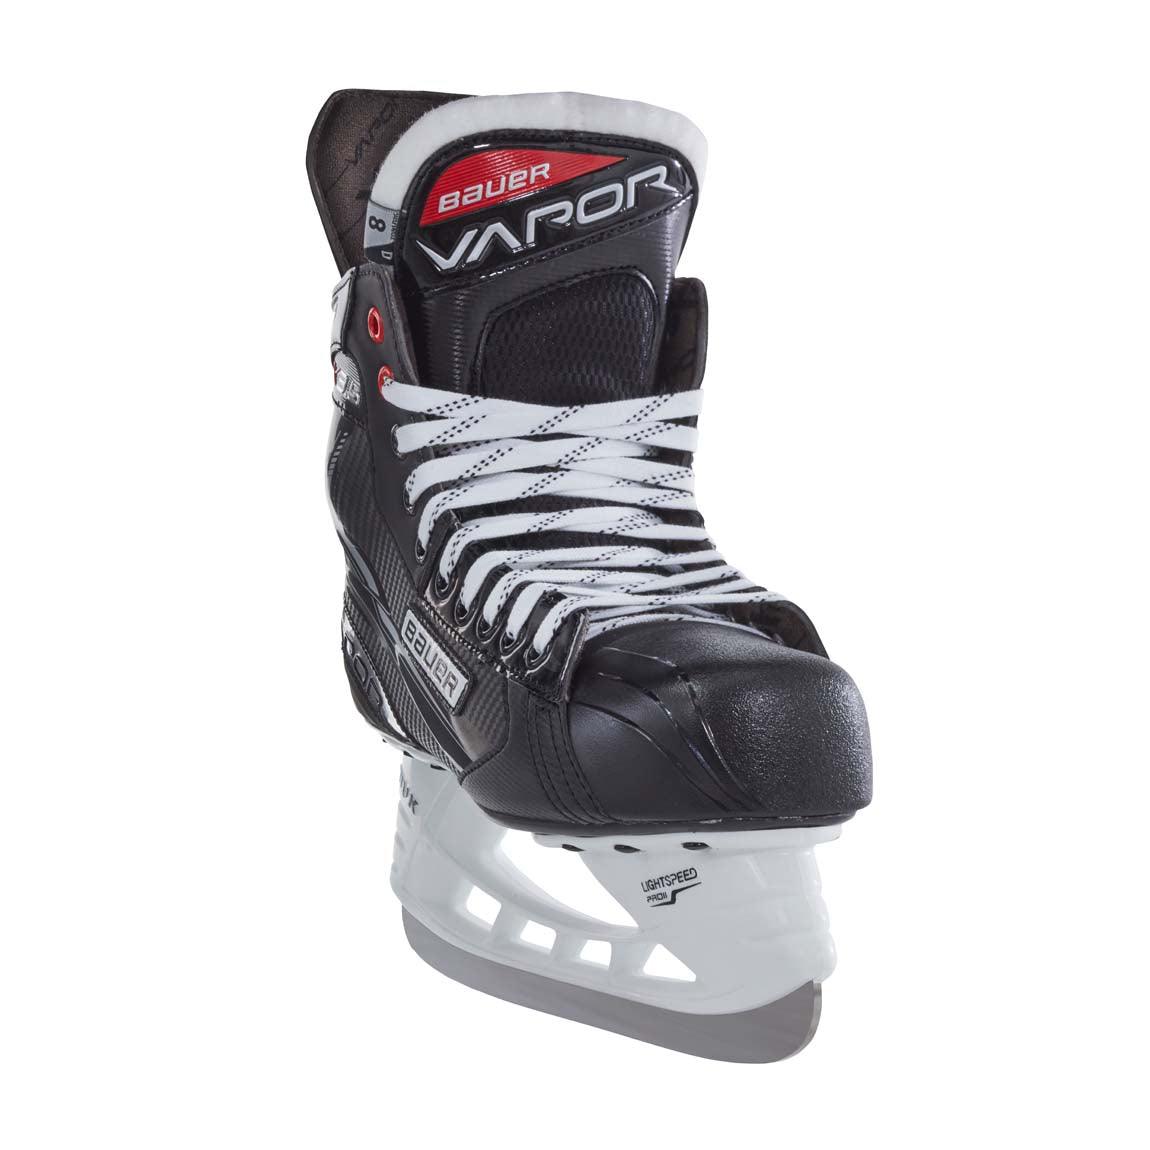 Vapor X3.5 Hockey Skate - Junior - Sports Excellence